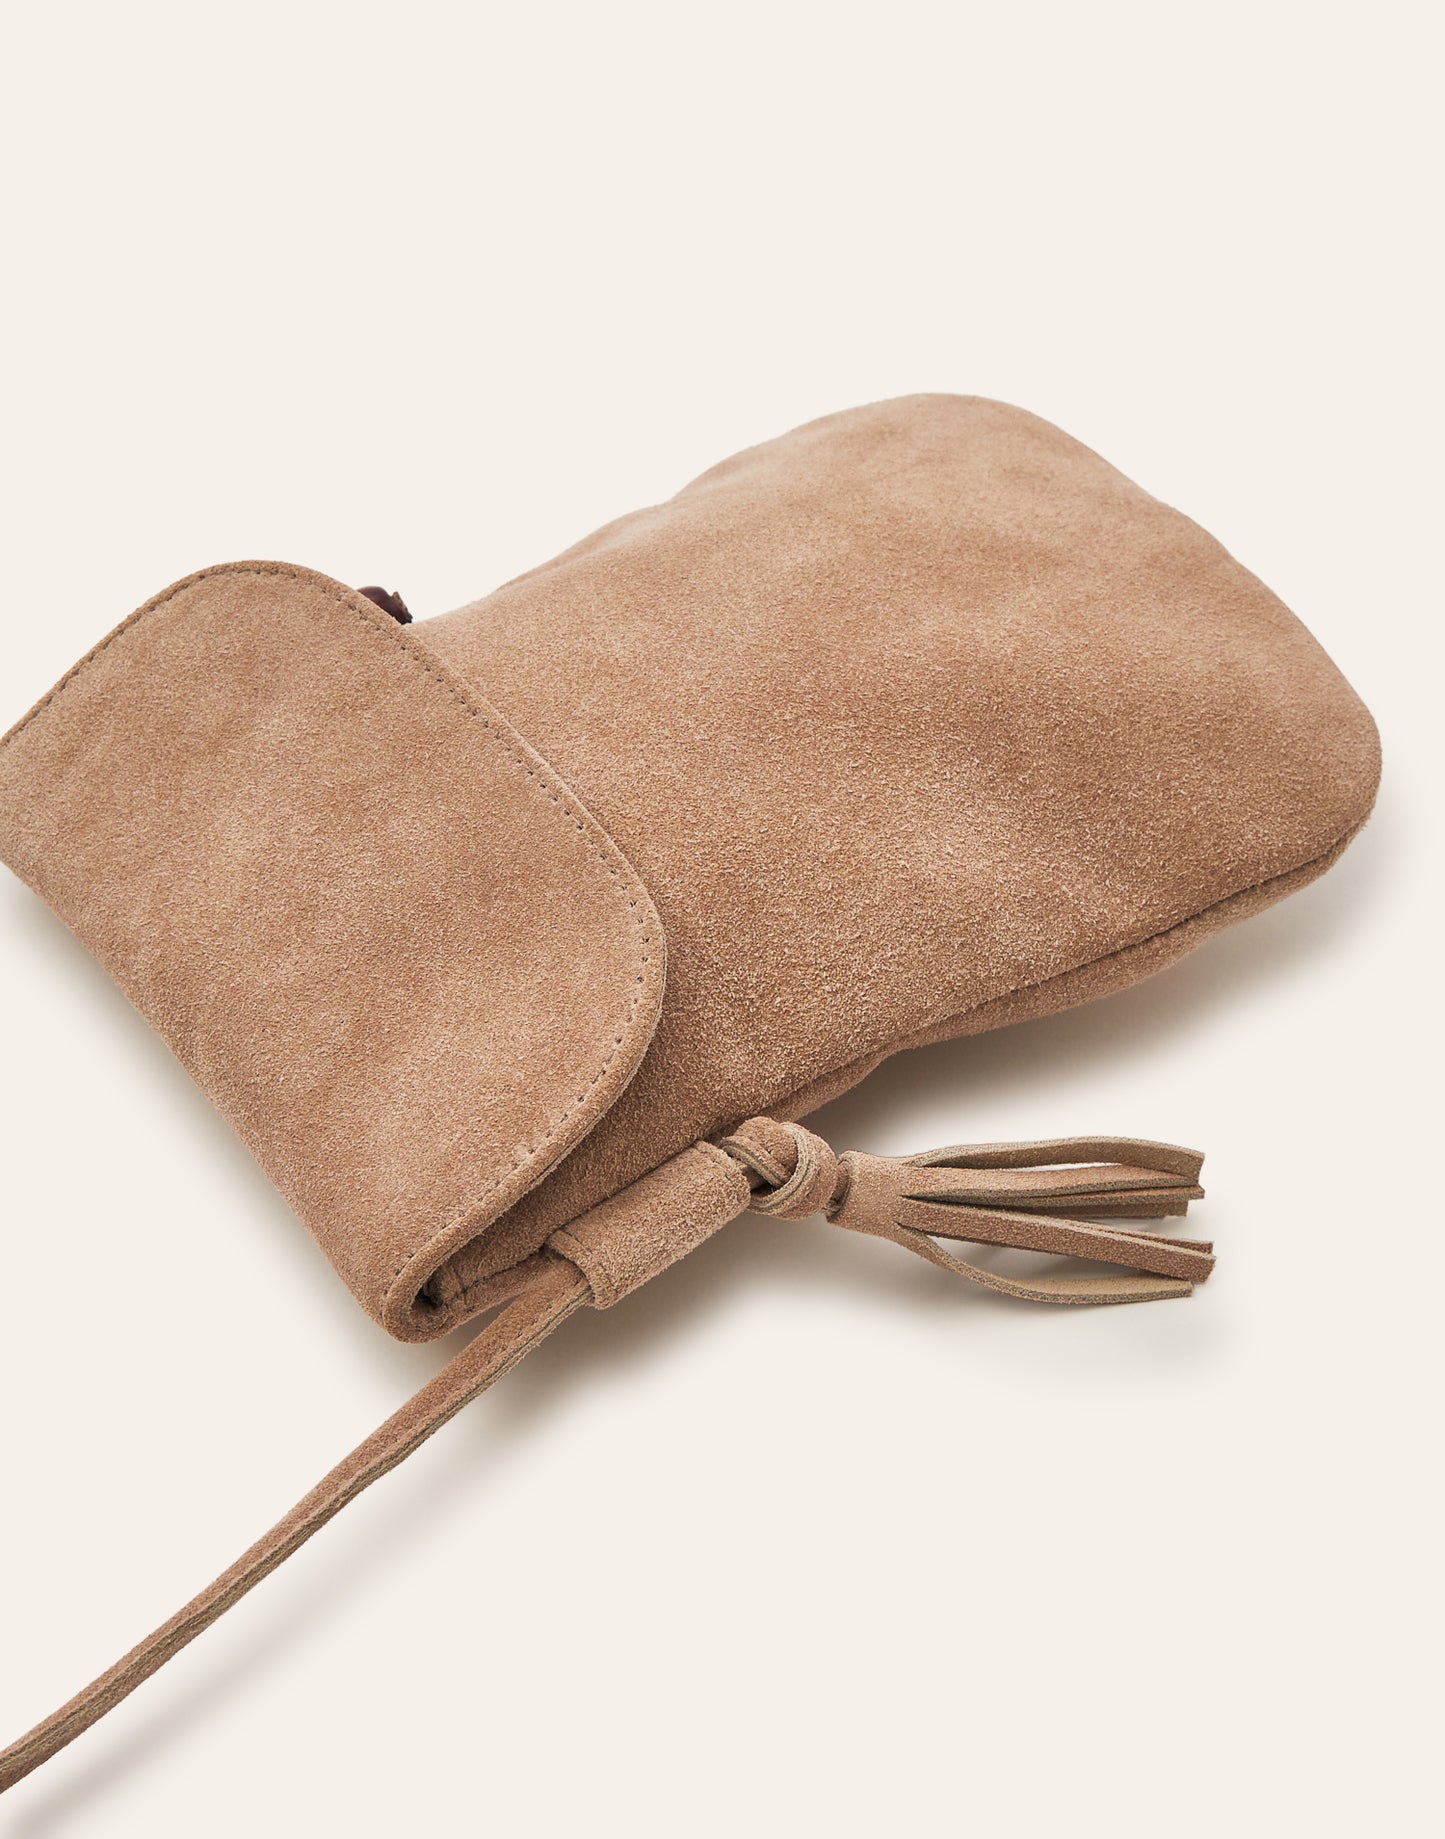 Mobile bag flap pouch